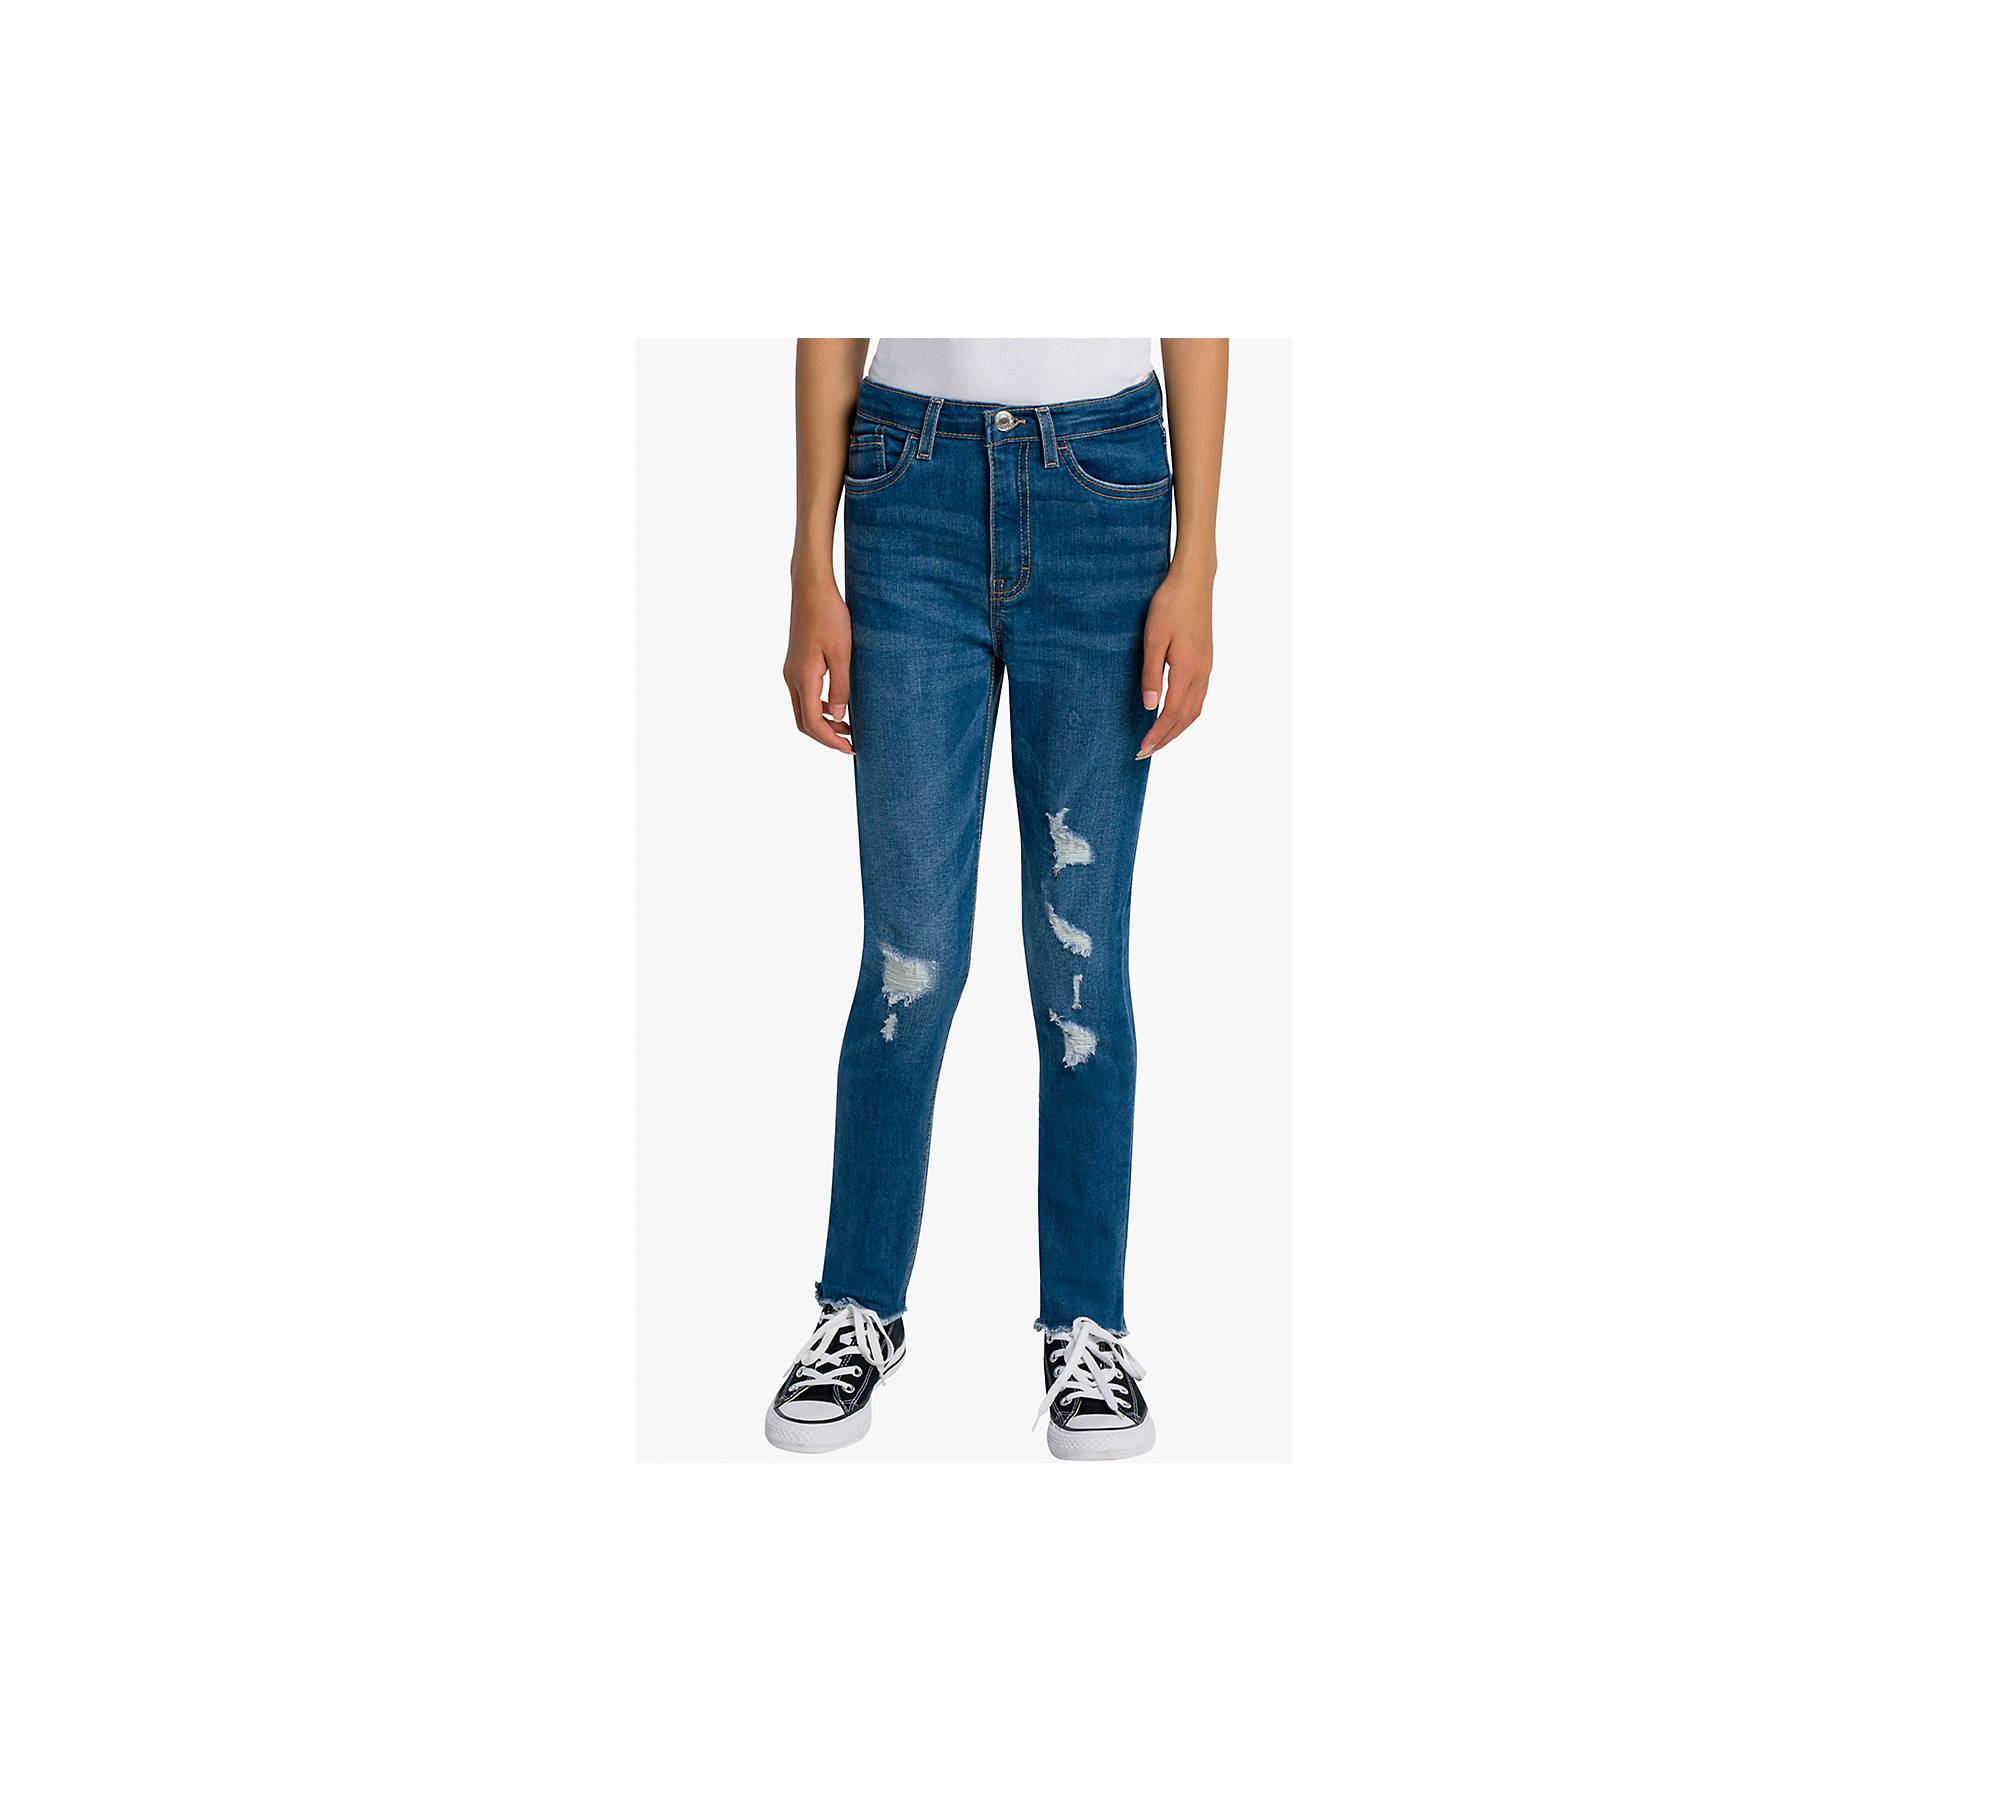 Levi's 720 High Rise Super Skinny Women's Jeans - Ontario Skip 25 x 30